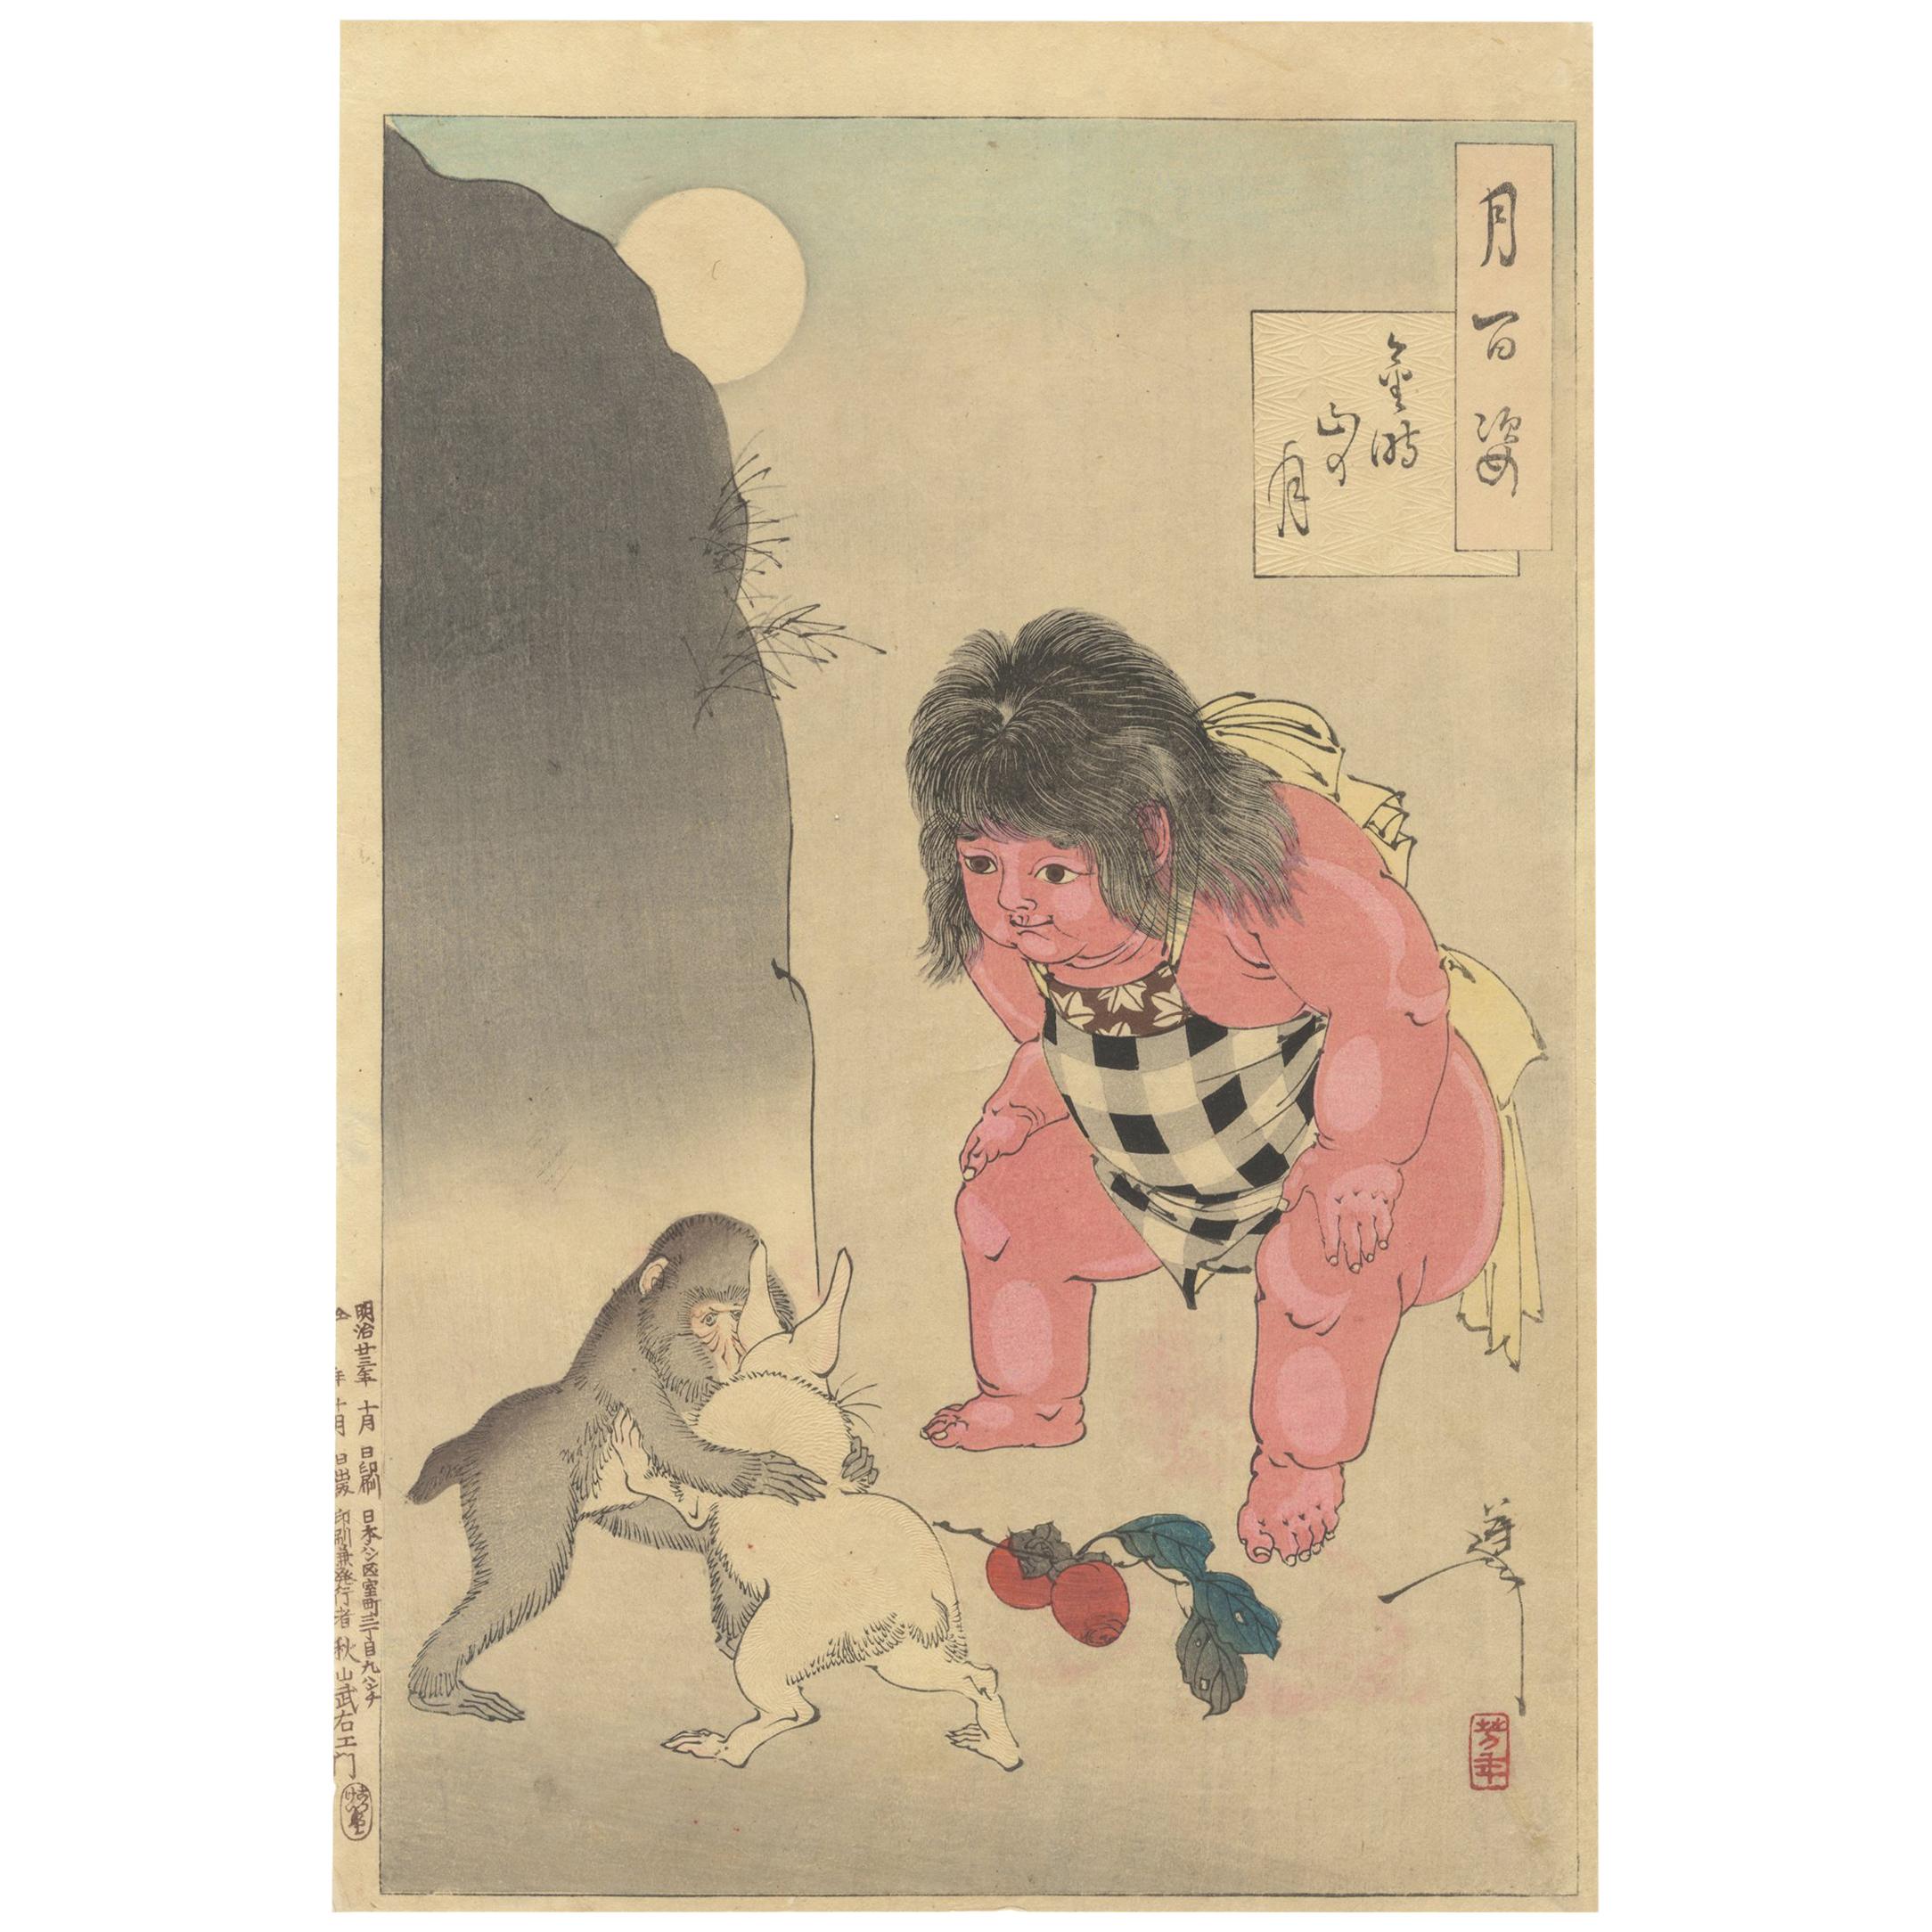 Kintaro, Yoshitoshi, Original Japanese Woodblock Print, 100 Aspects of the Moon